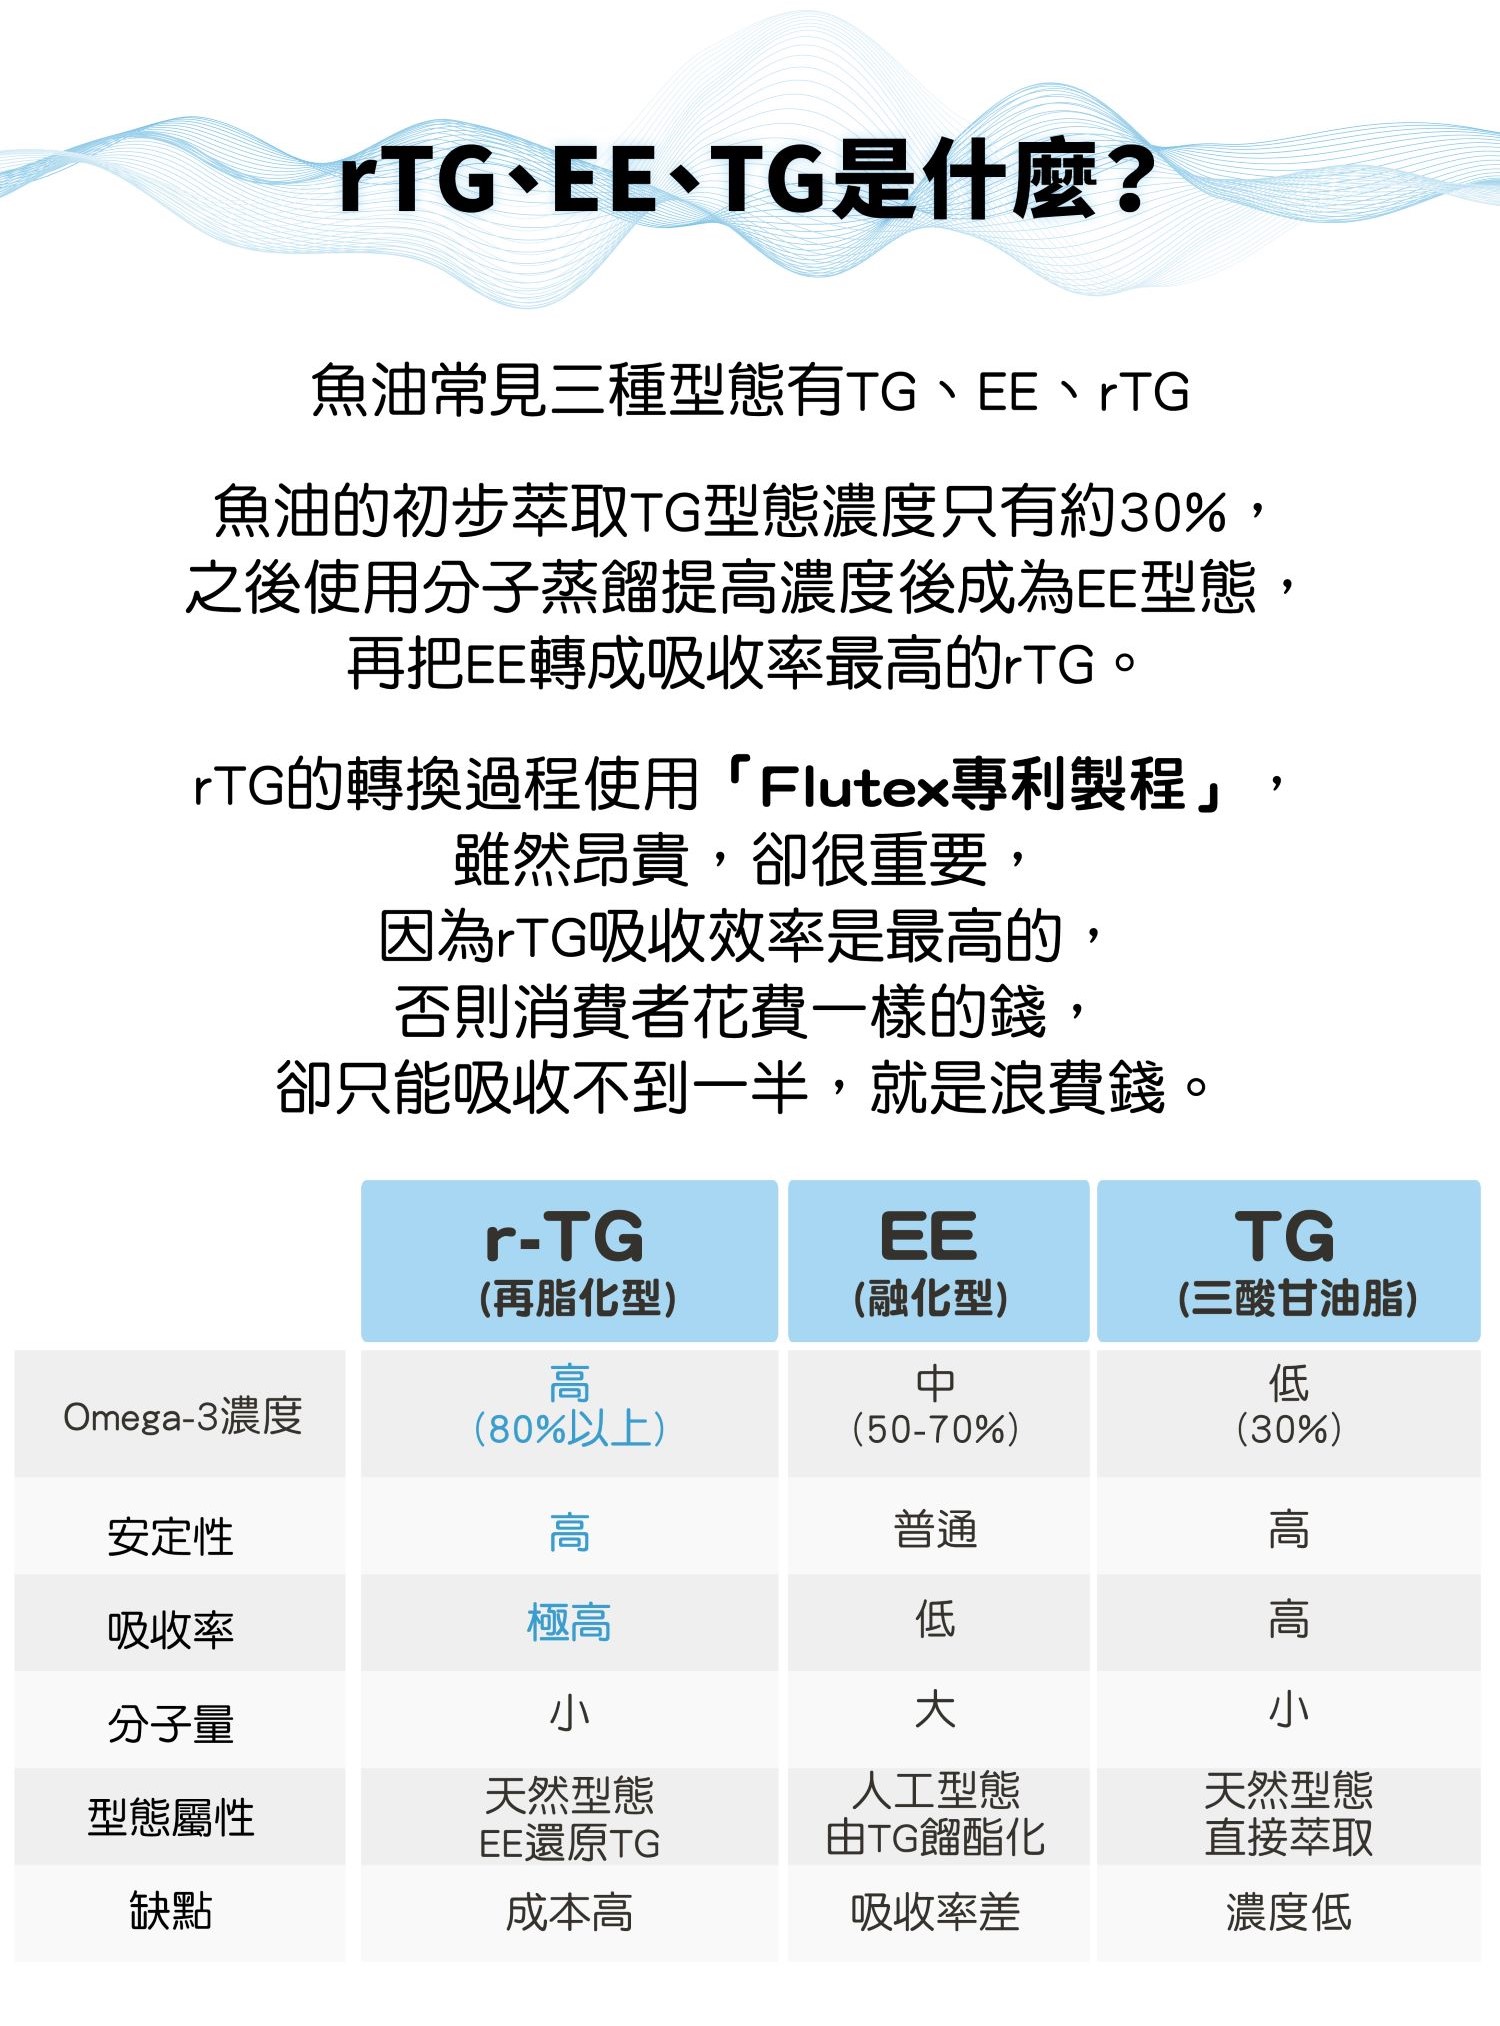 【rTG、EE、TG型態】是什麼？ 有何不同？ 魚油常見三種型態TG、EE、rTG。魚油的初步萃取TG型態濃度只有約30%，之後使用分子蒸餾提高濃度後成為EE型態，再把EE轉成吸收率更高的rTG。rTG的轉換過程使用【FLUTEX®專利製程】，雖然昂貴，卻很重要，因為rTG吸收效率是最高的，否則消費者花費一樣的錢，卻只能吸收不到一半，就是浪費錢。